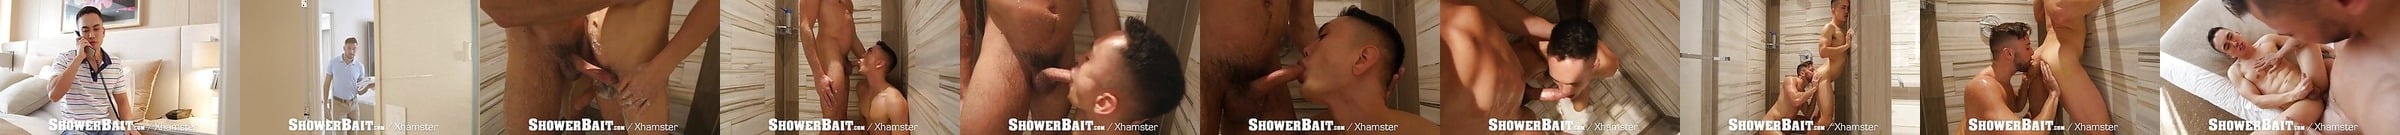 Shower Bait Gay Porn Videos Xhamster